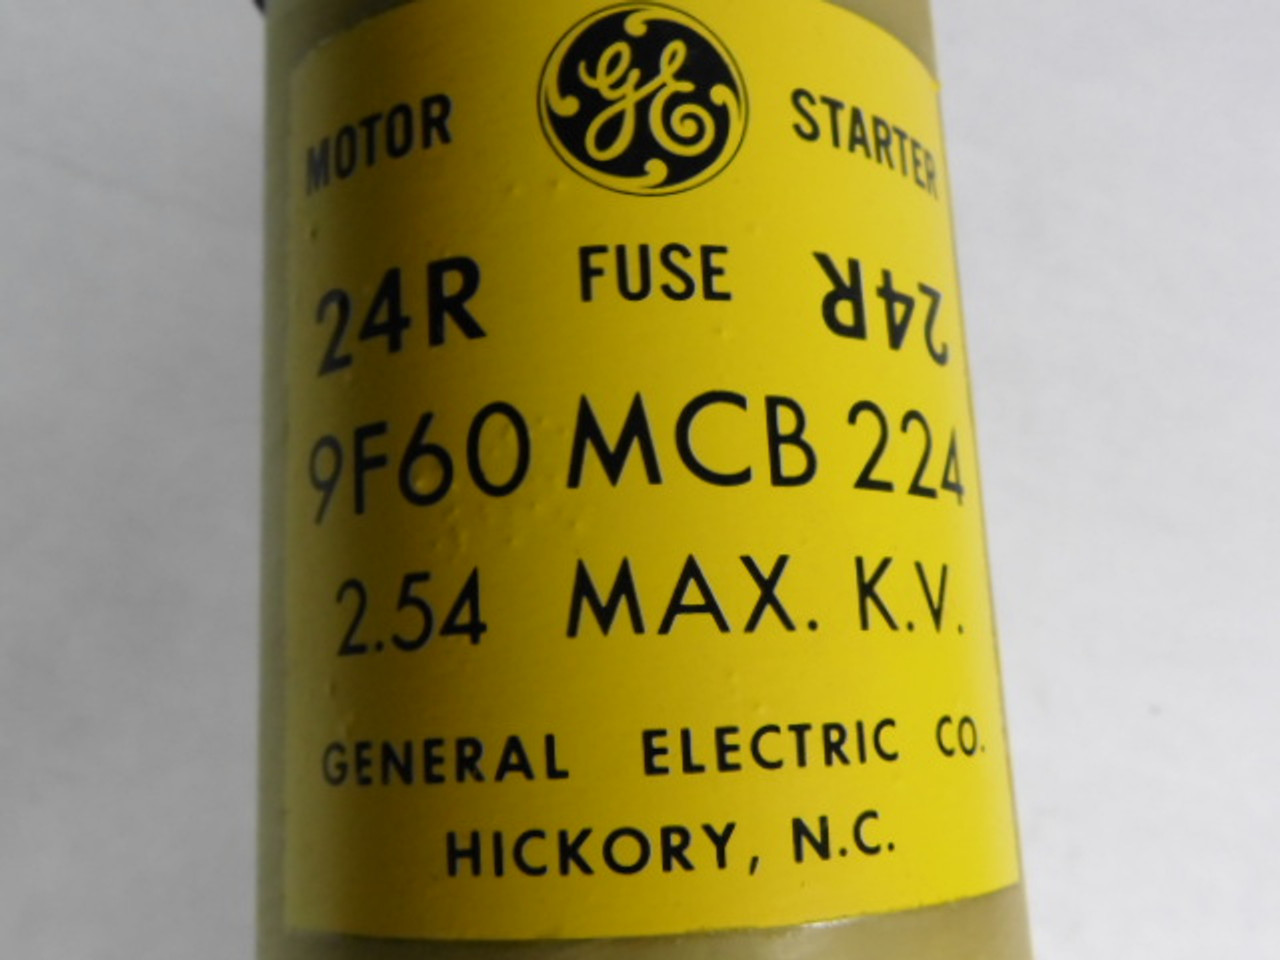 General Electric 9F60MCB224 Double-Barrel Fuse 24R 2.54kV 60Hz ! NEW !